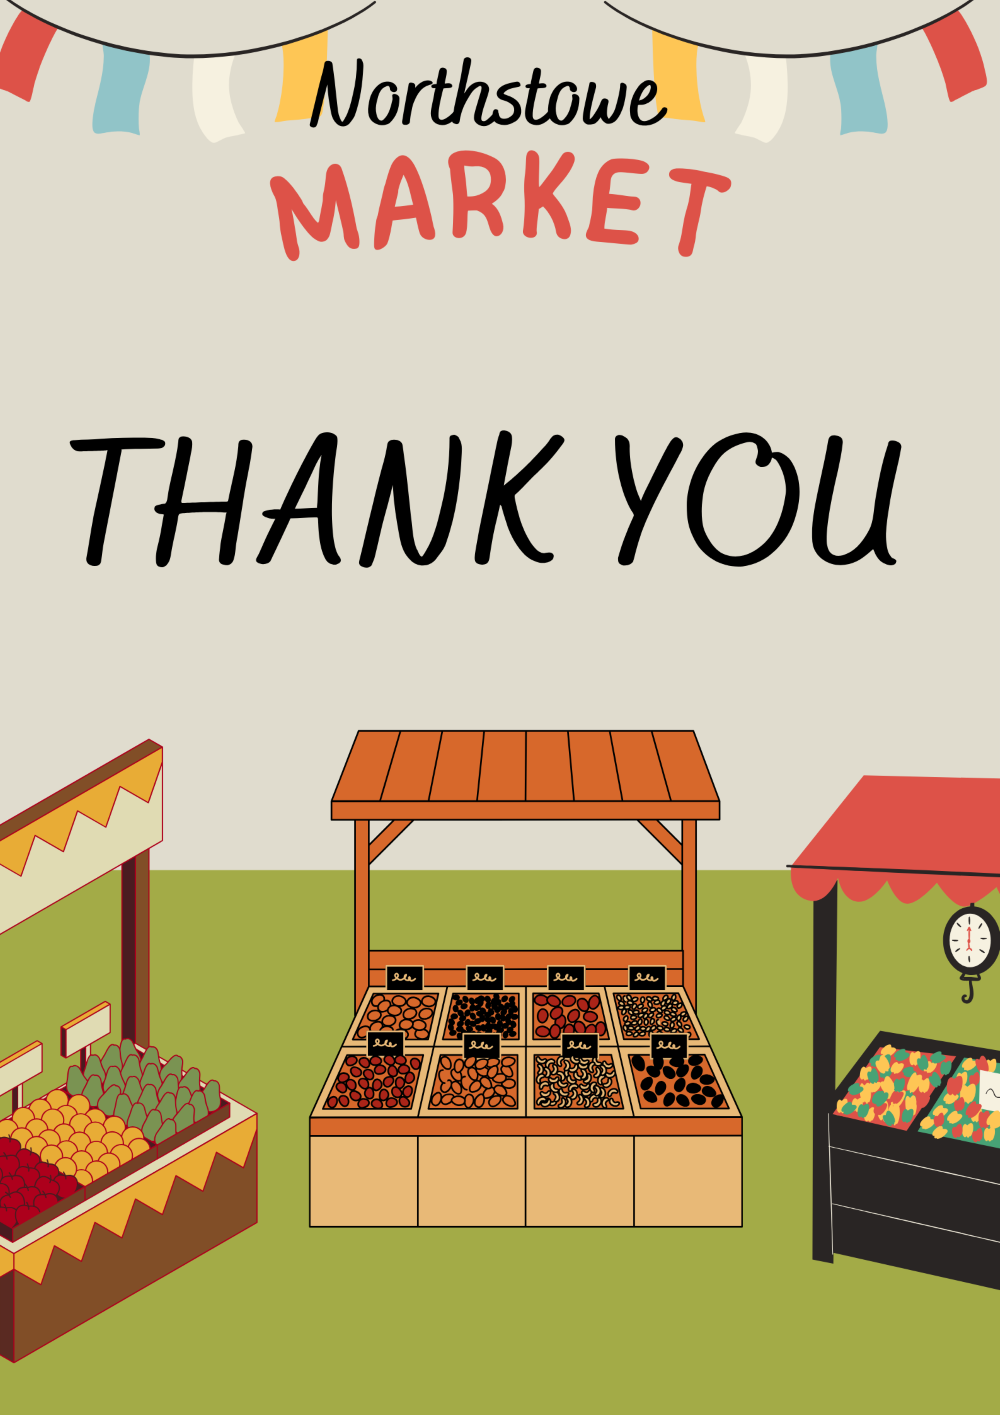 Thank you - market